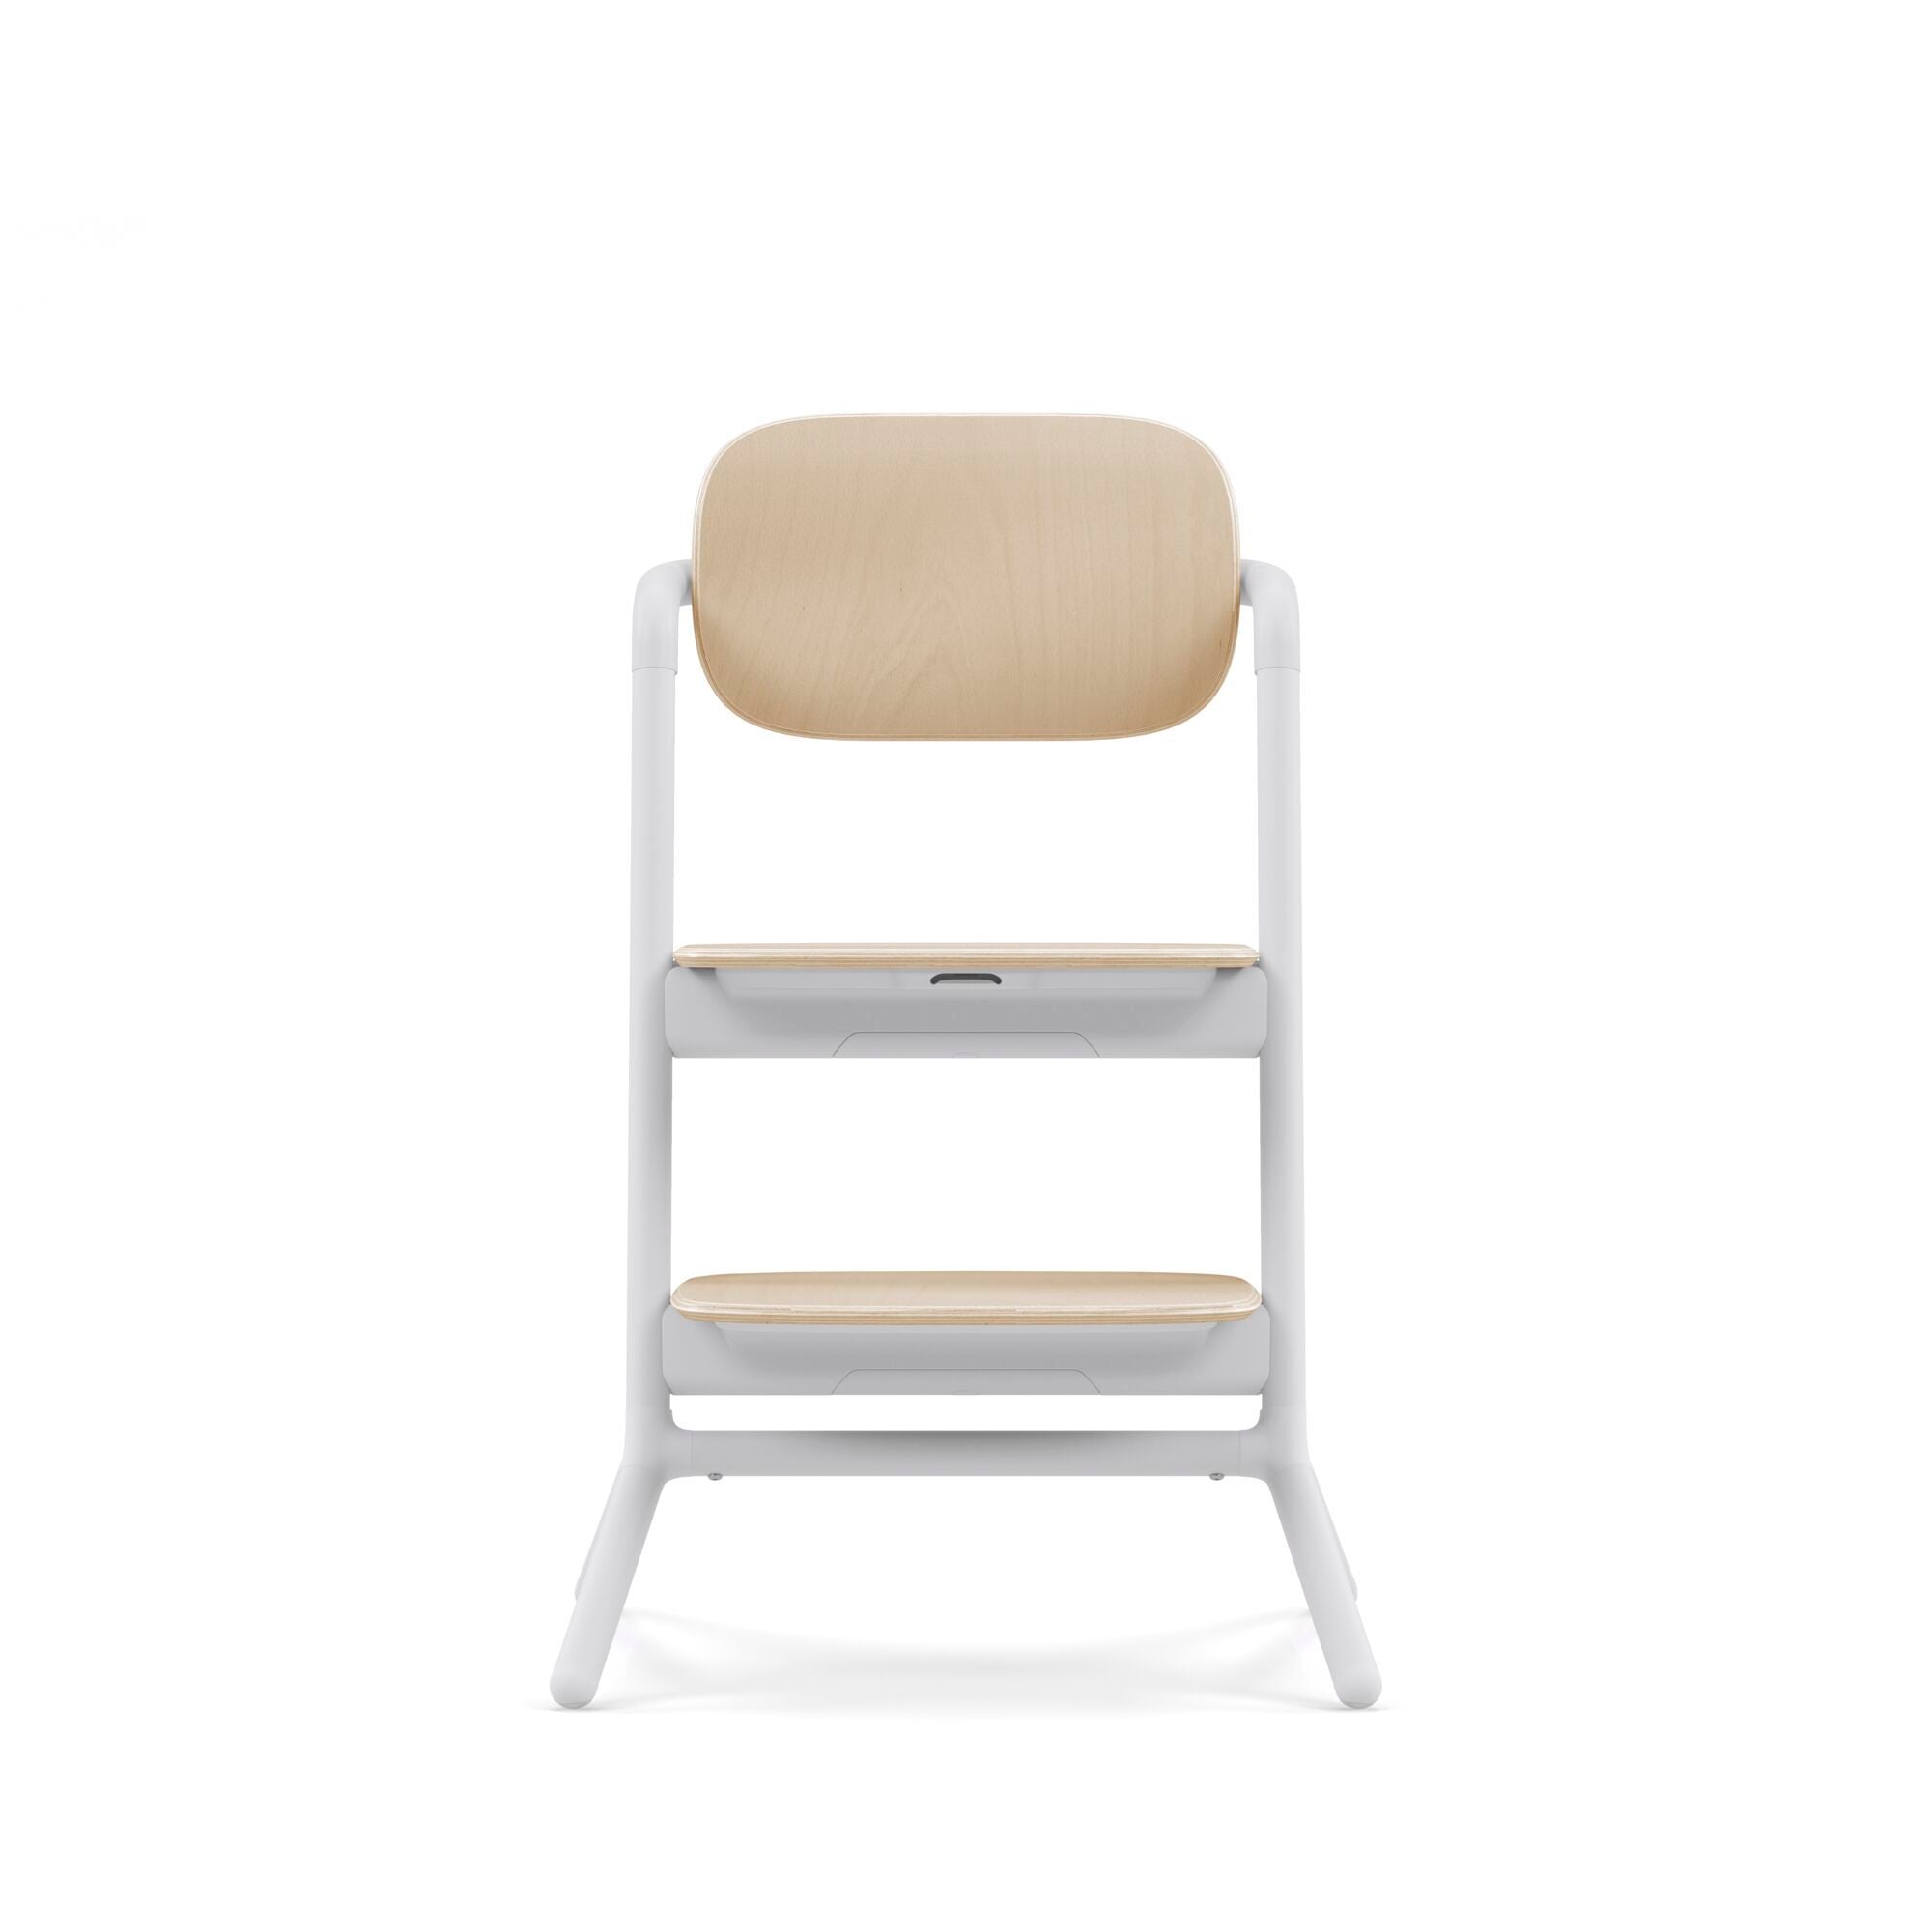 Cybex Lemo 2 High Chair 3-in-1 - ANB Baby -4063846197644$100 - $300